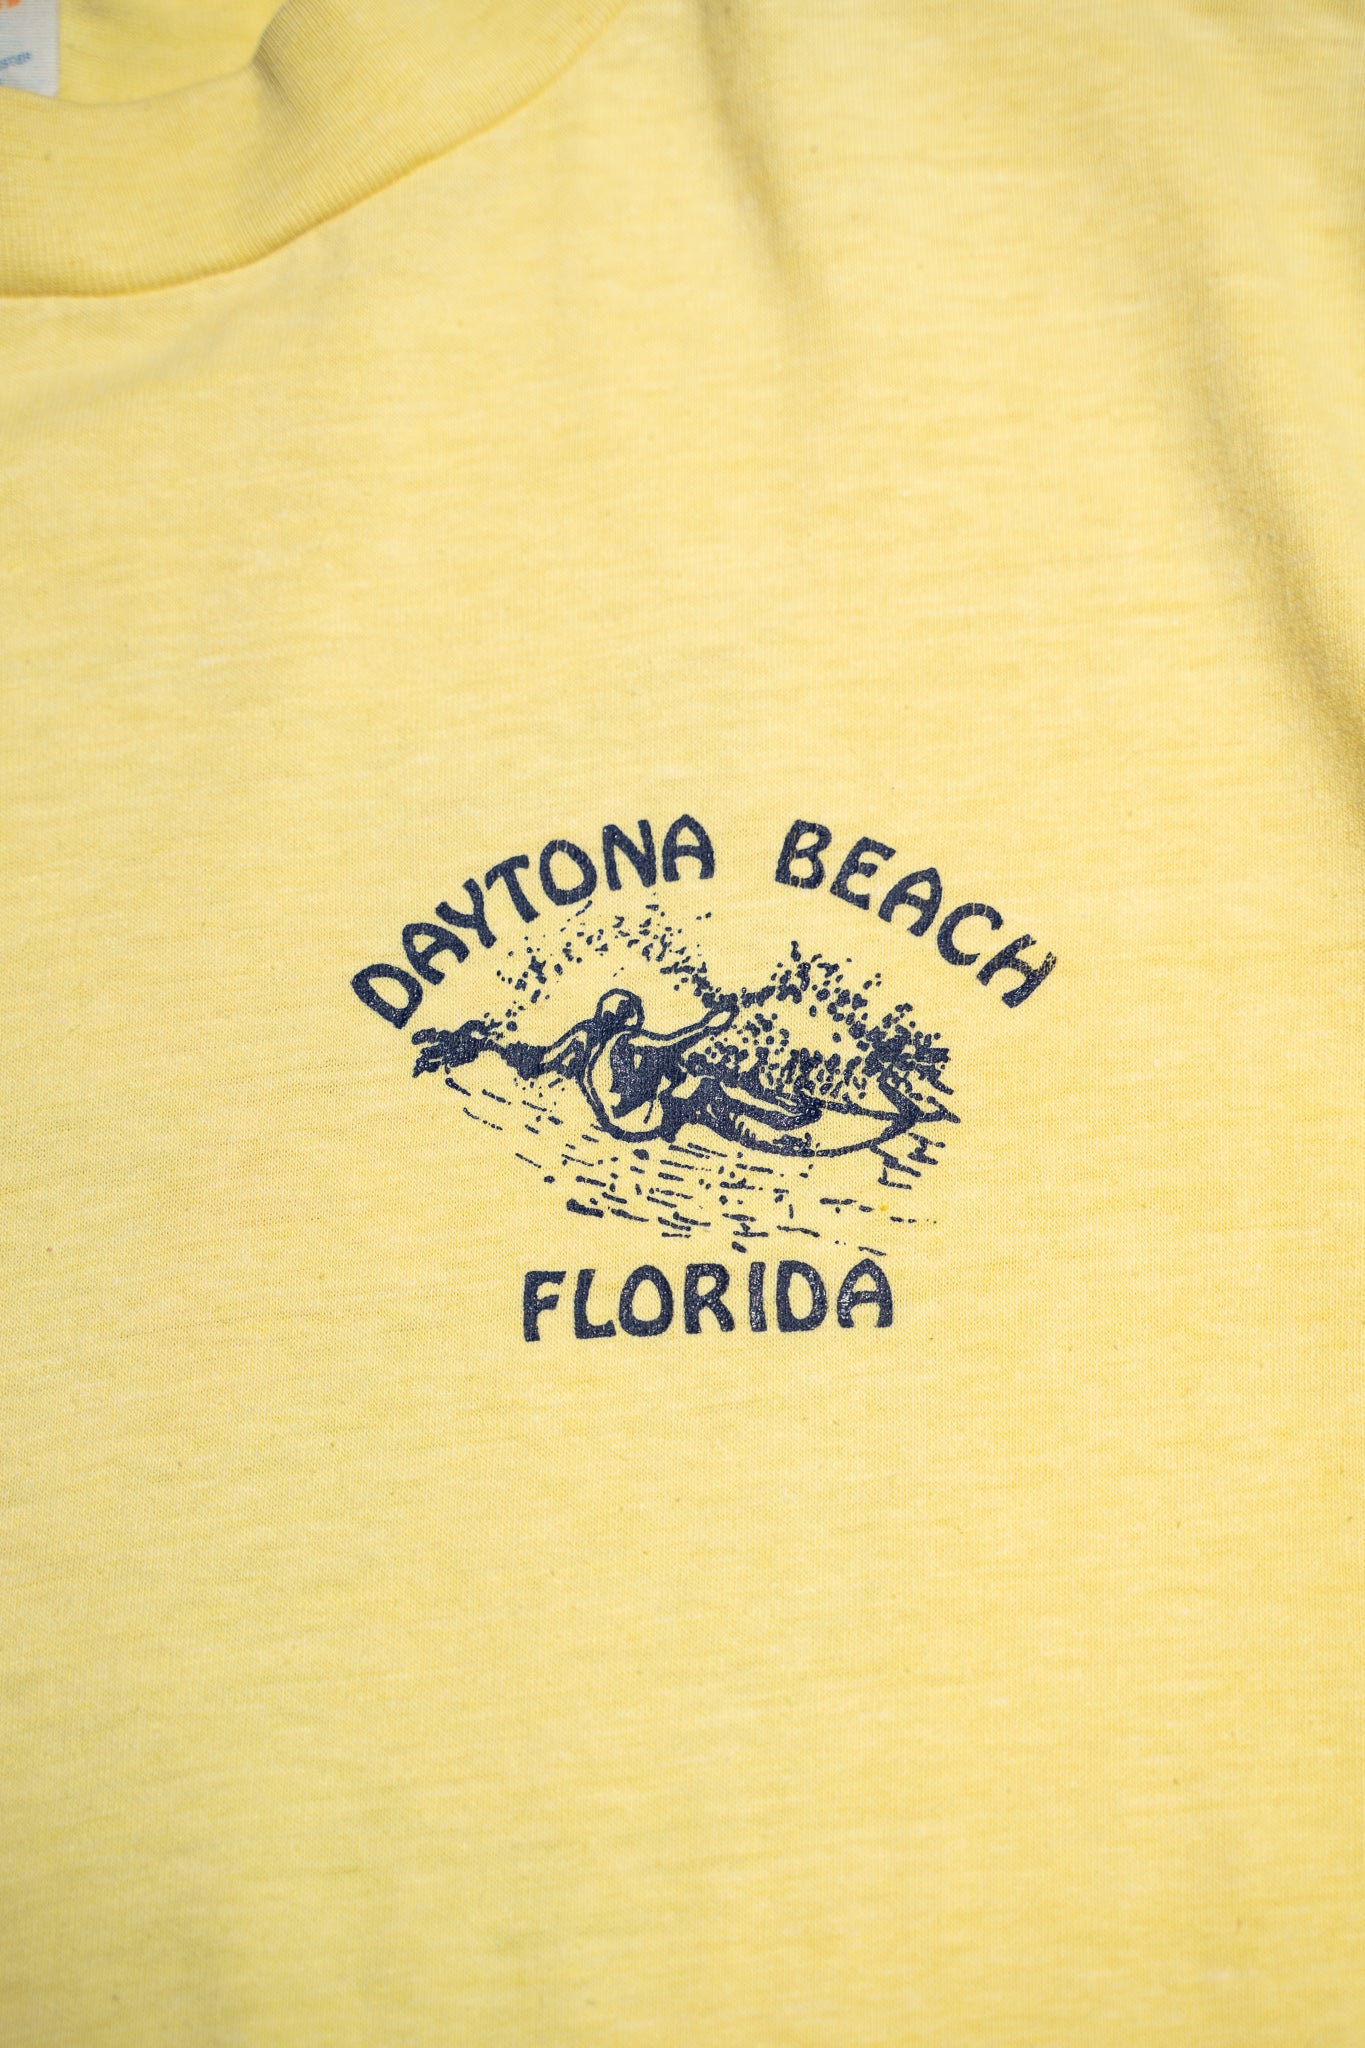 DAYTONA BEACH Souvenir Long T-shirts